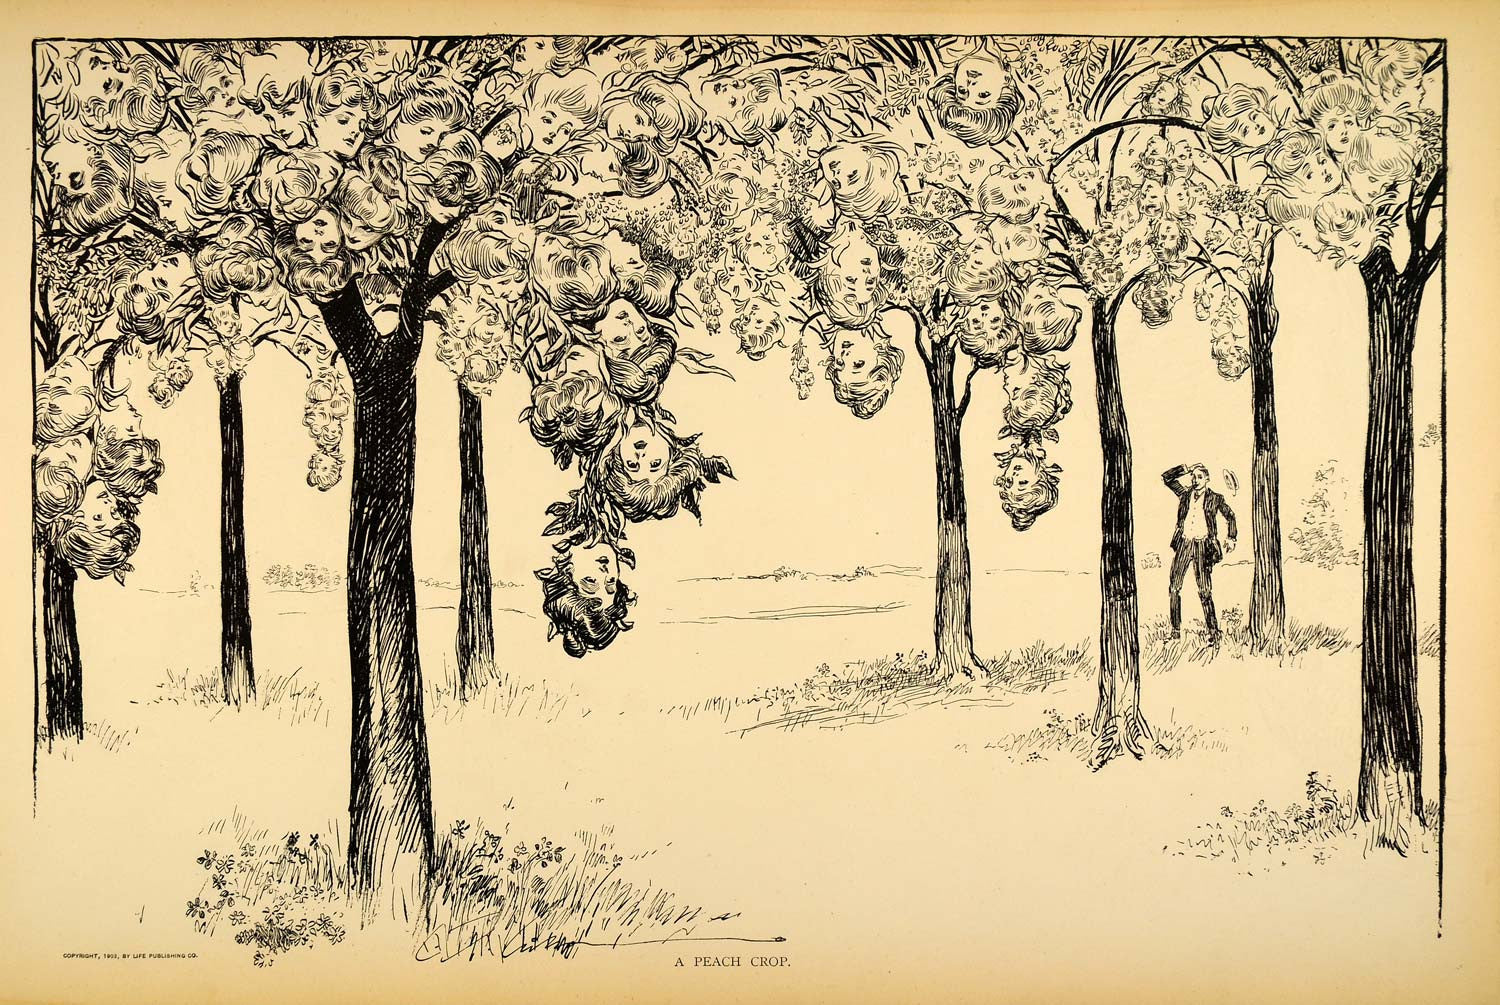 1906 Print Charles Dana Gibson Girls Peach Crop Victorian Satire Humor Drawing - Period Paper
